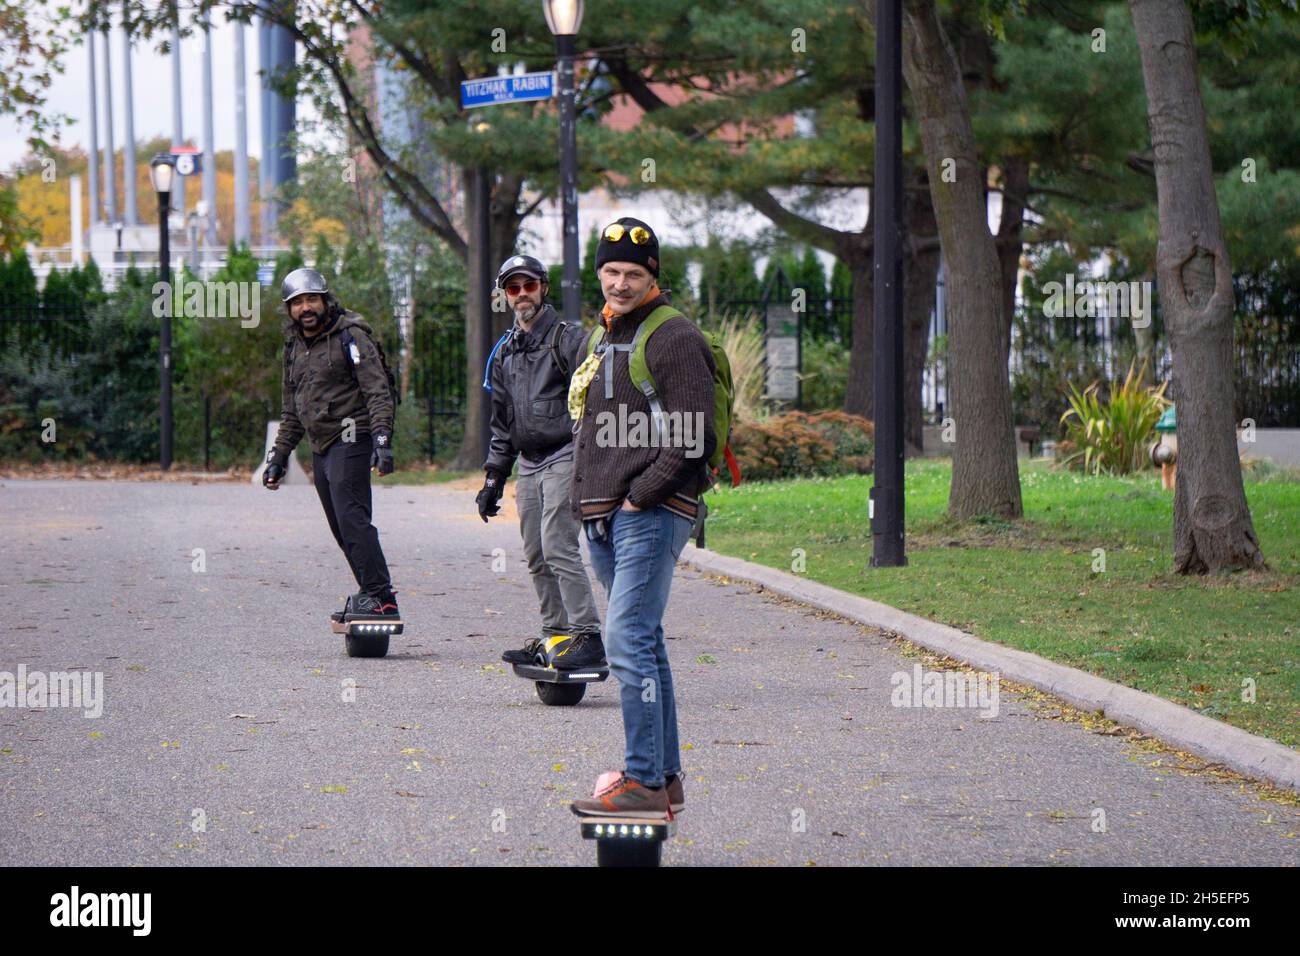 3 men, each riding a ONEWHEEL, a self-balancing single wheel electric board-sport, described as an electric skateboard. In Queens, New York City. Stock Photo